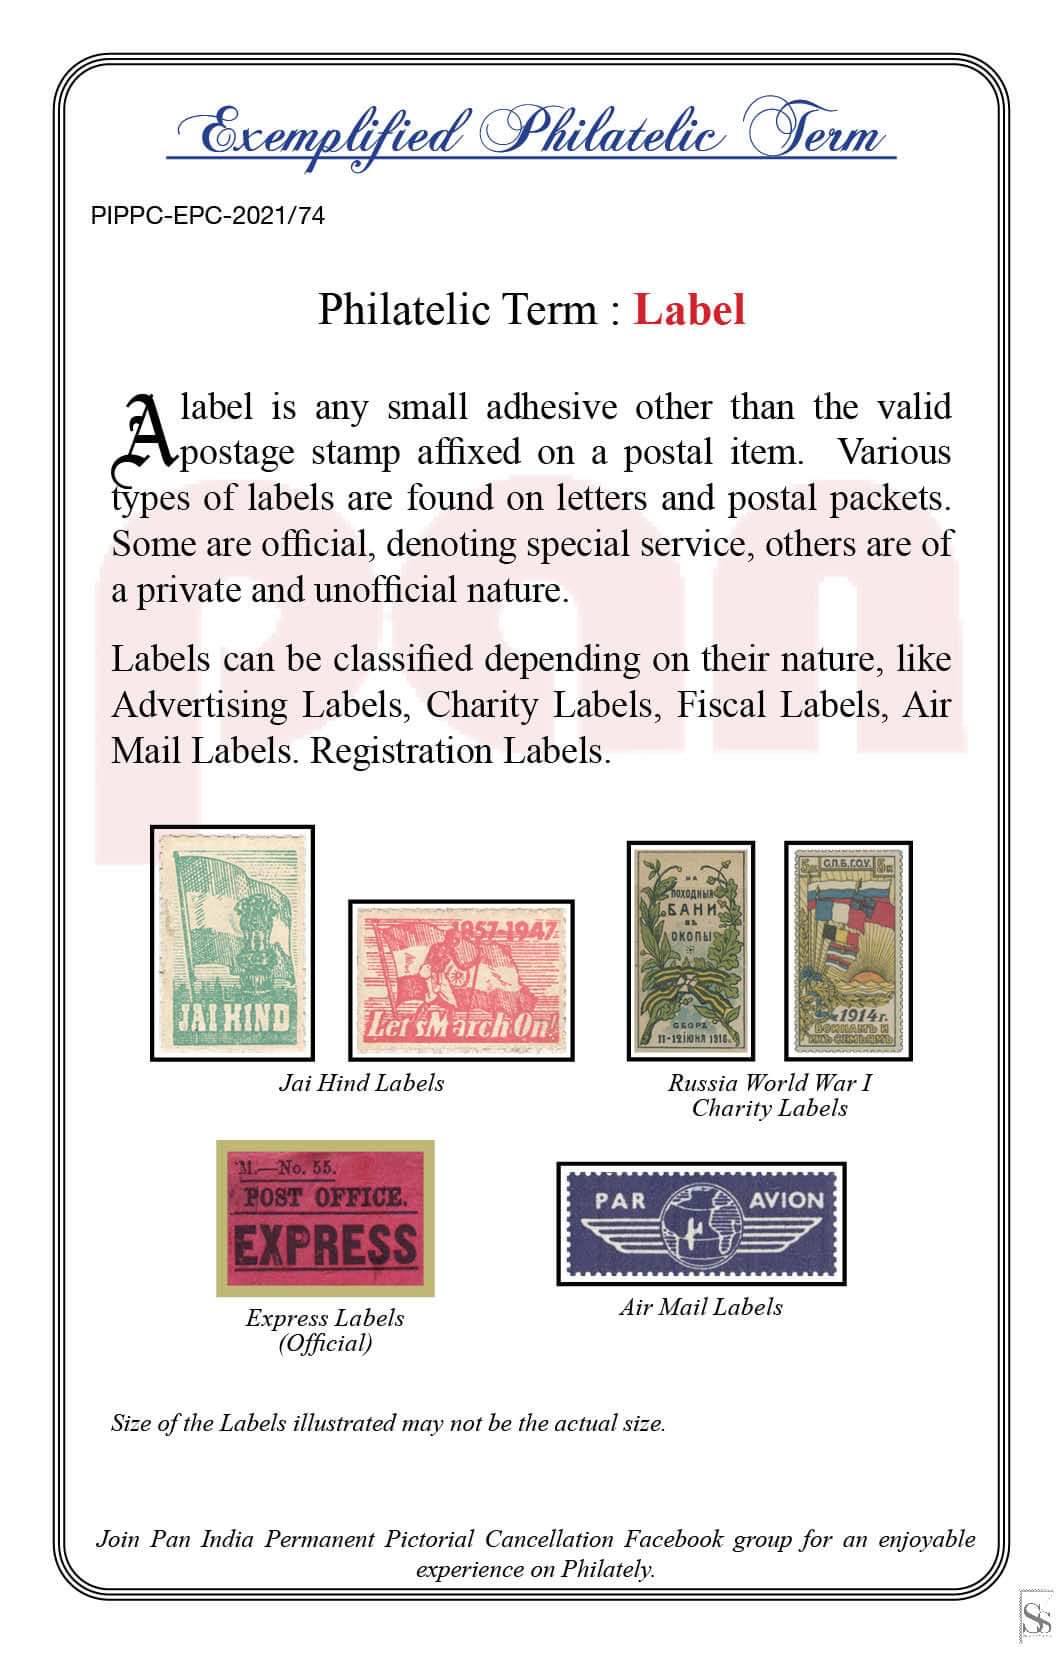 74. Today's Exemplified Philatelic term-Label